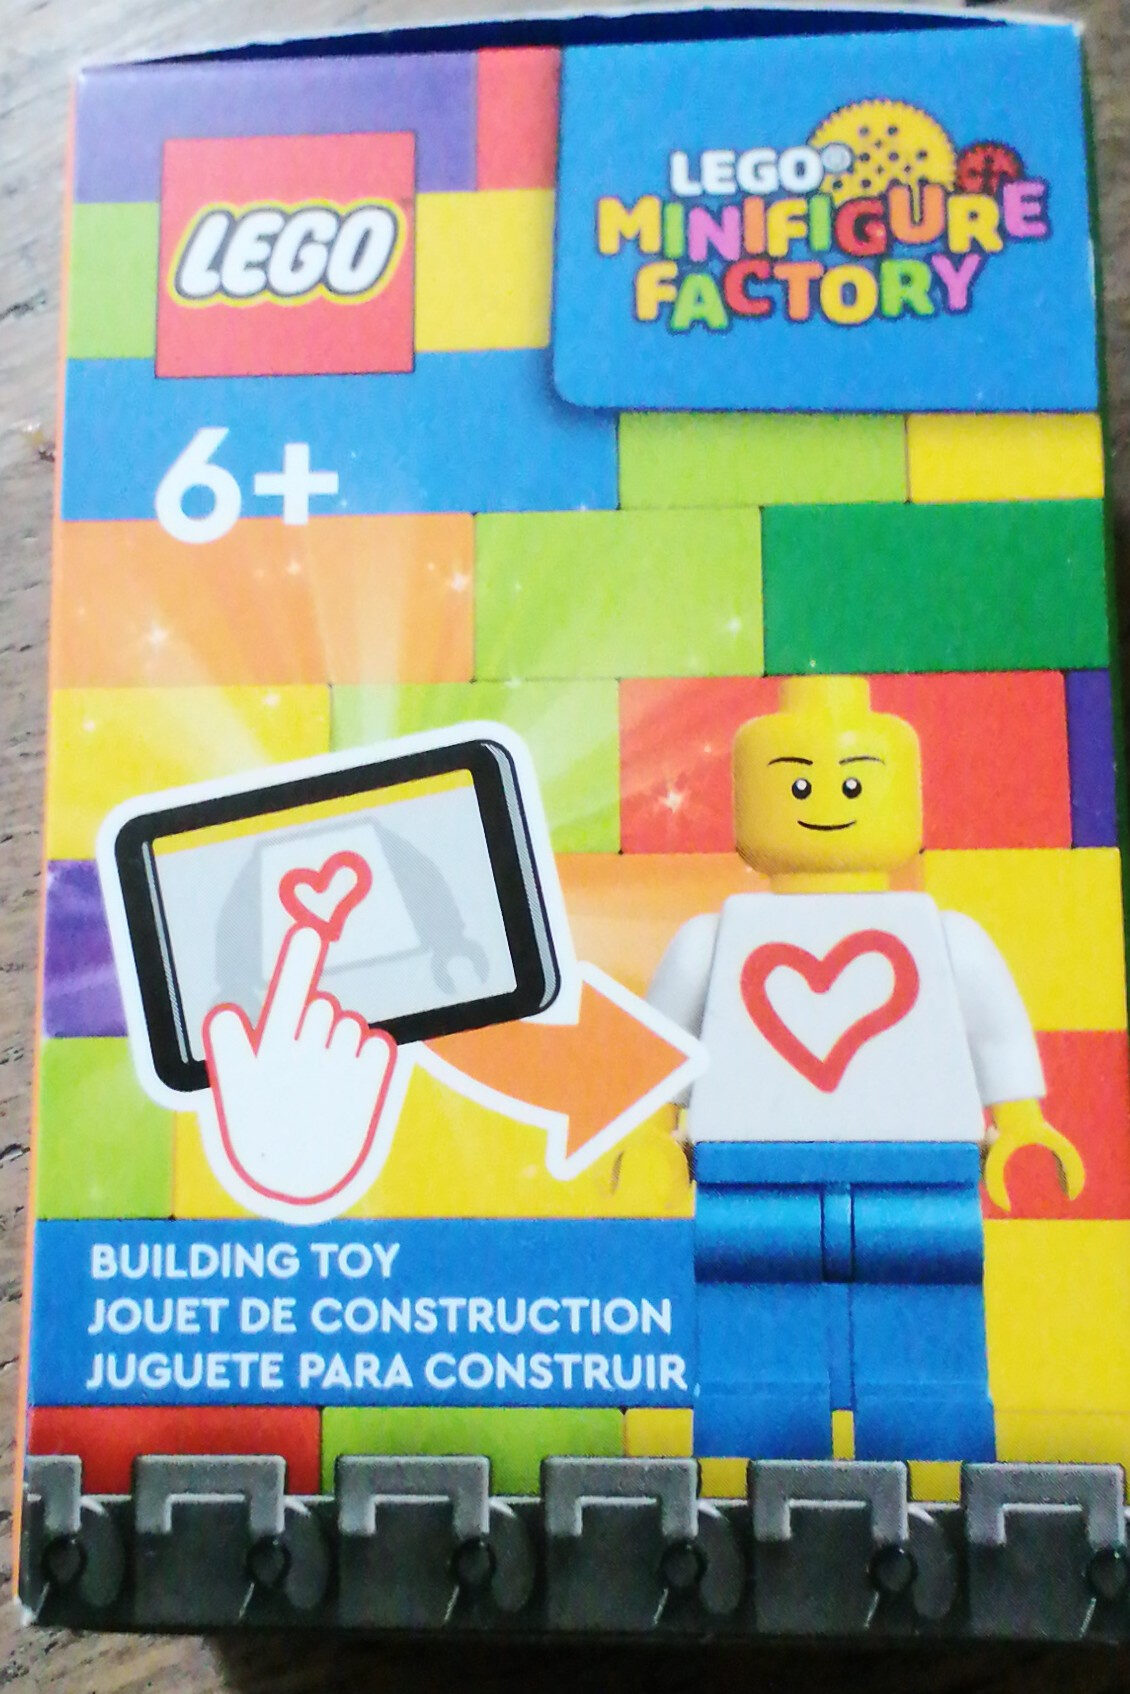 Lego® minifigure factory - Product - it